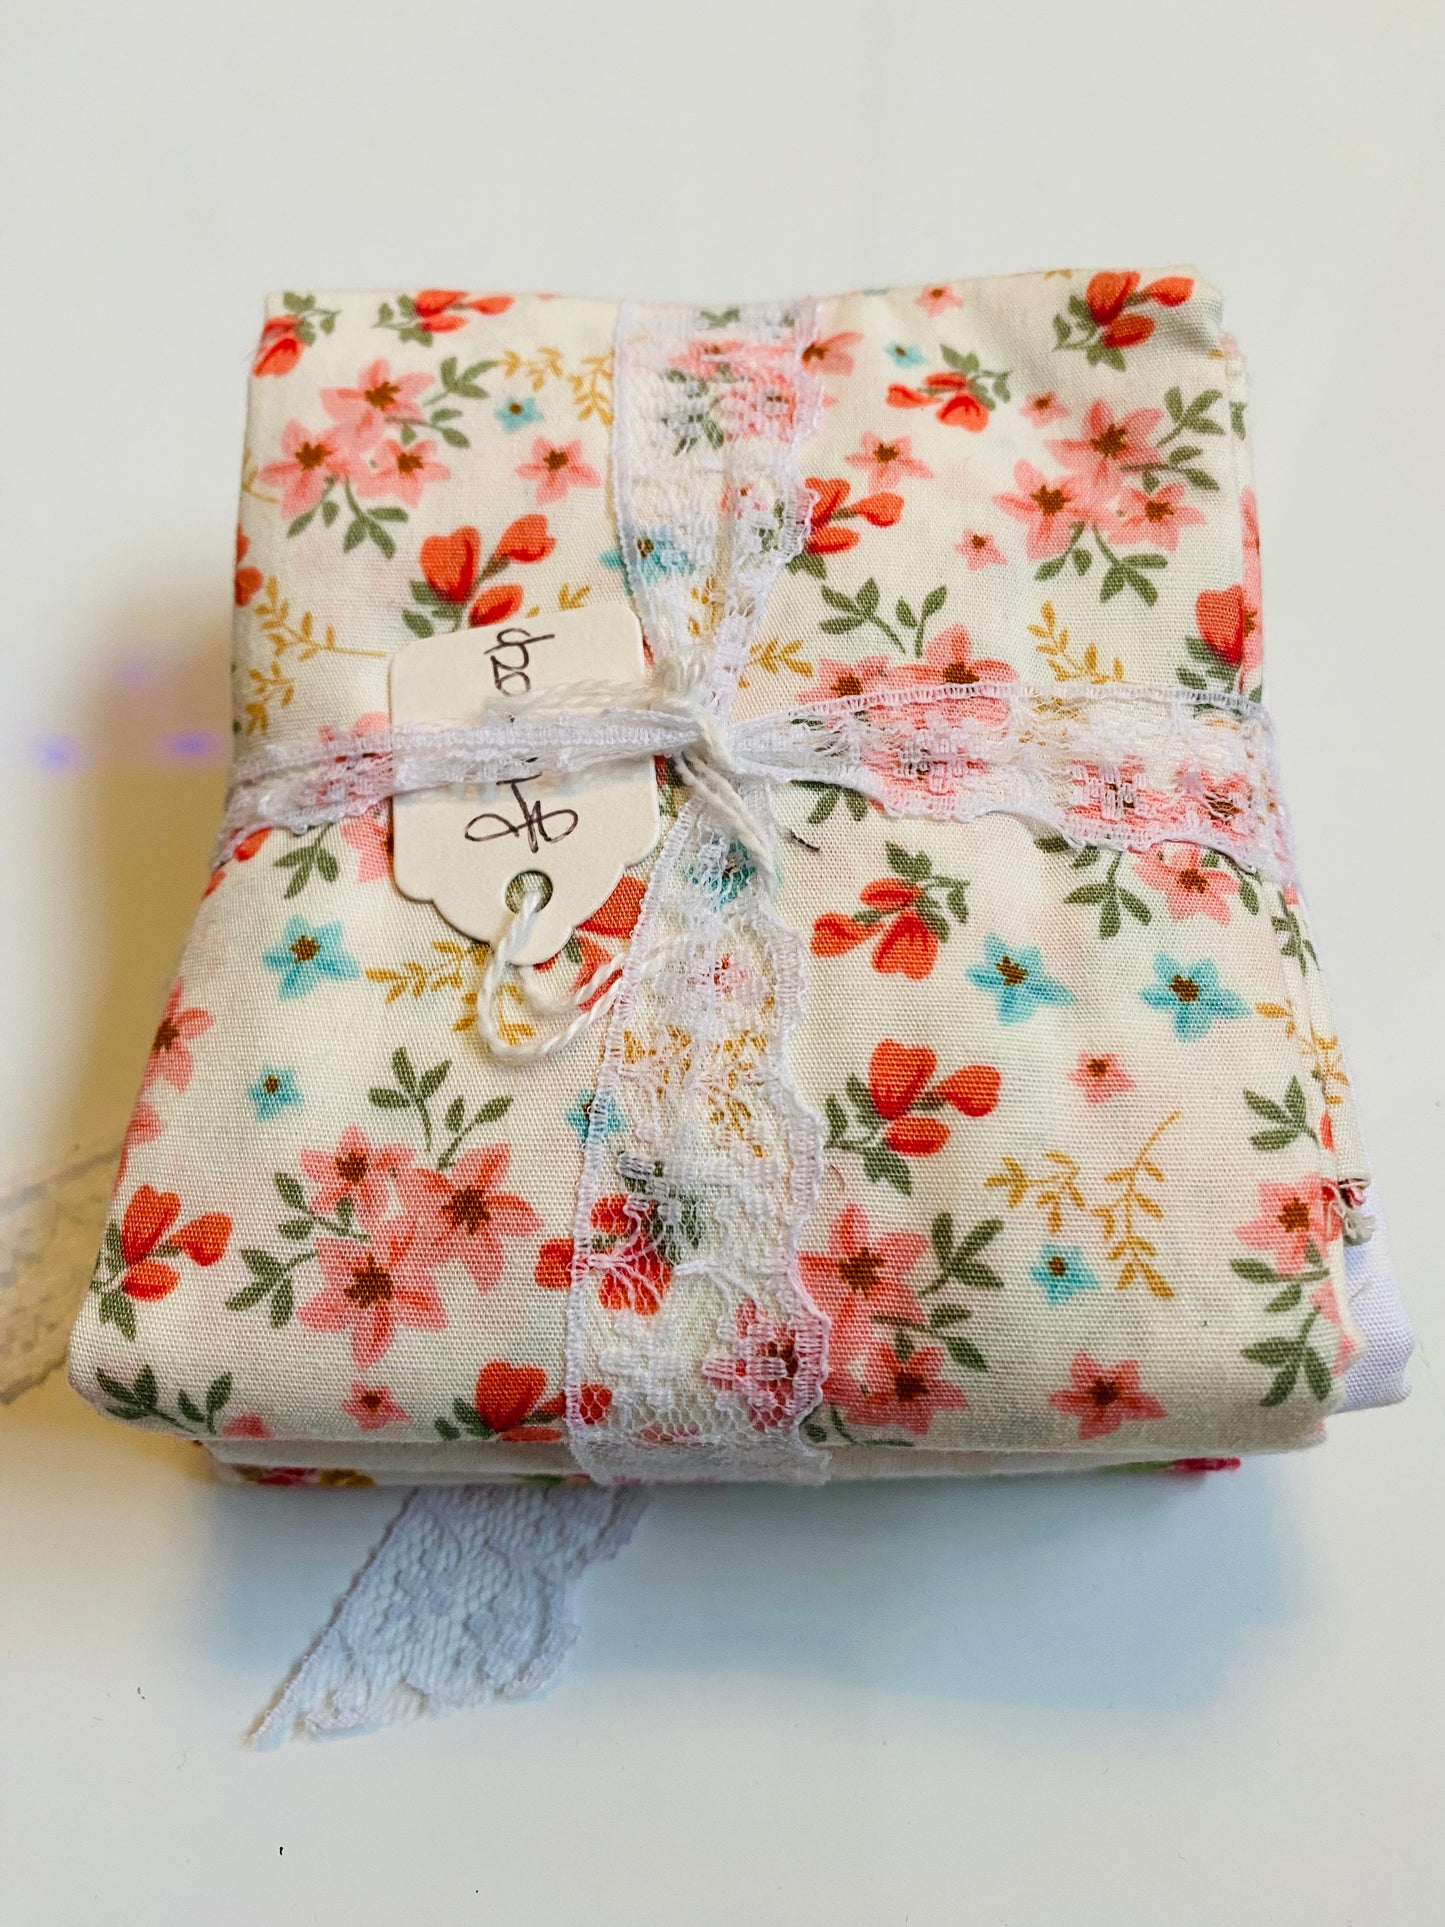 Fabric Fat Quarter Bundle - 'Spring Whites & Pinks' - 100% Cotton